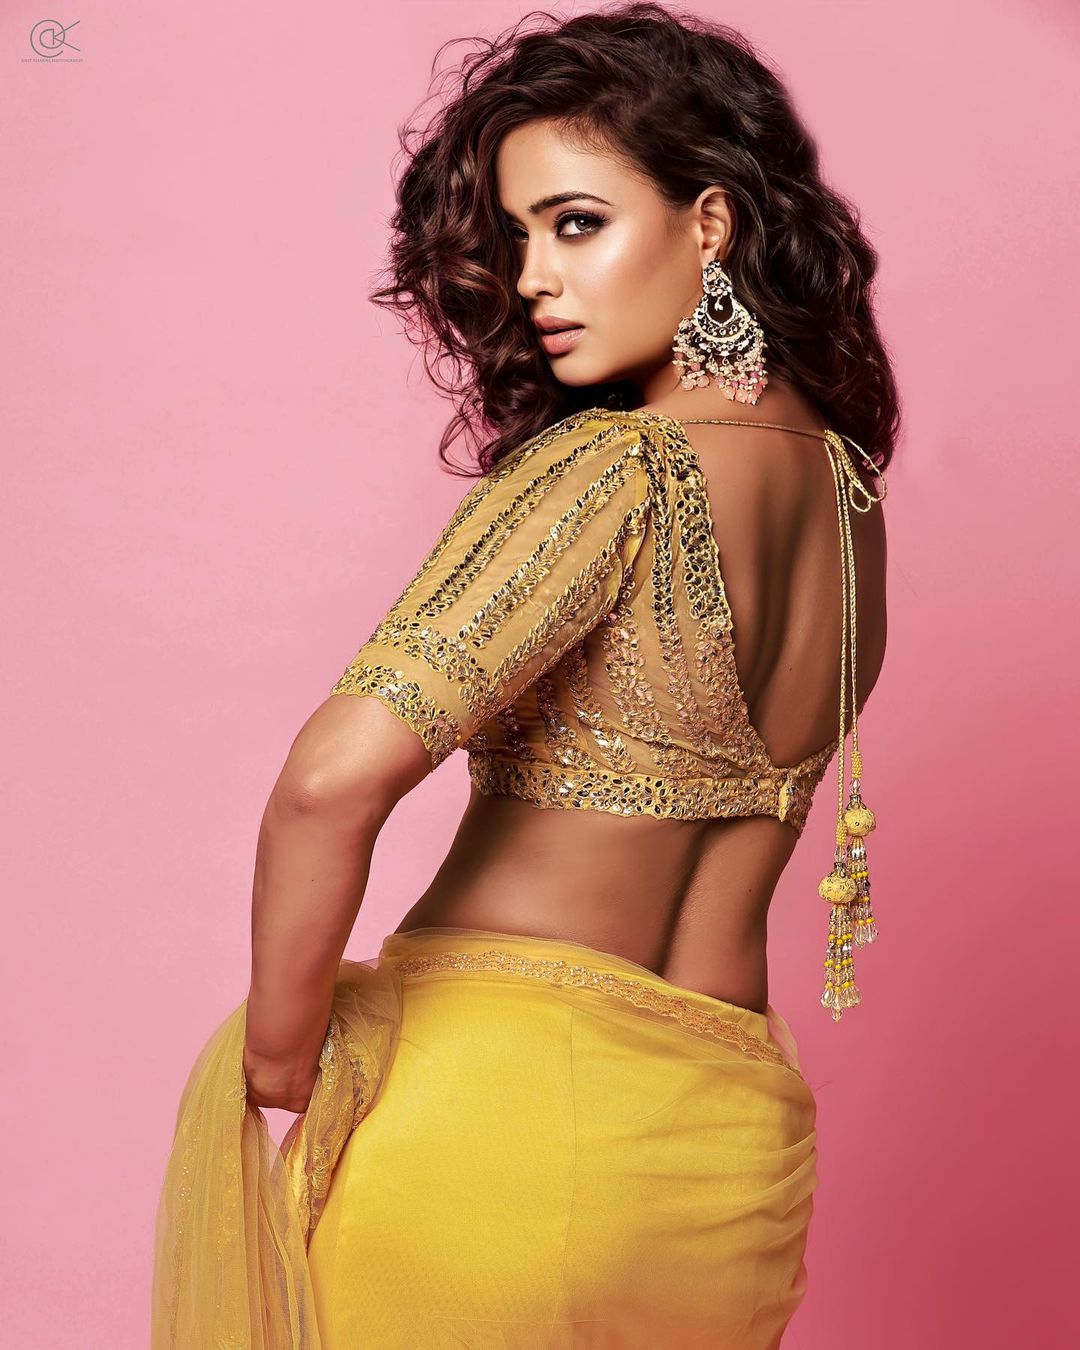 Shweta Tiwari looks sensuous in the yellow saree